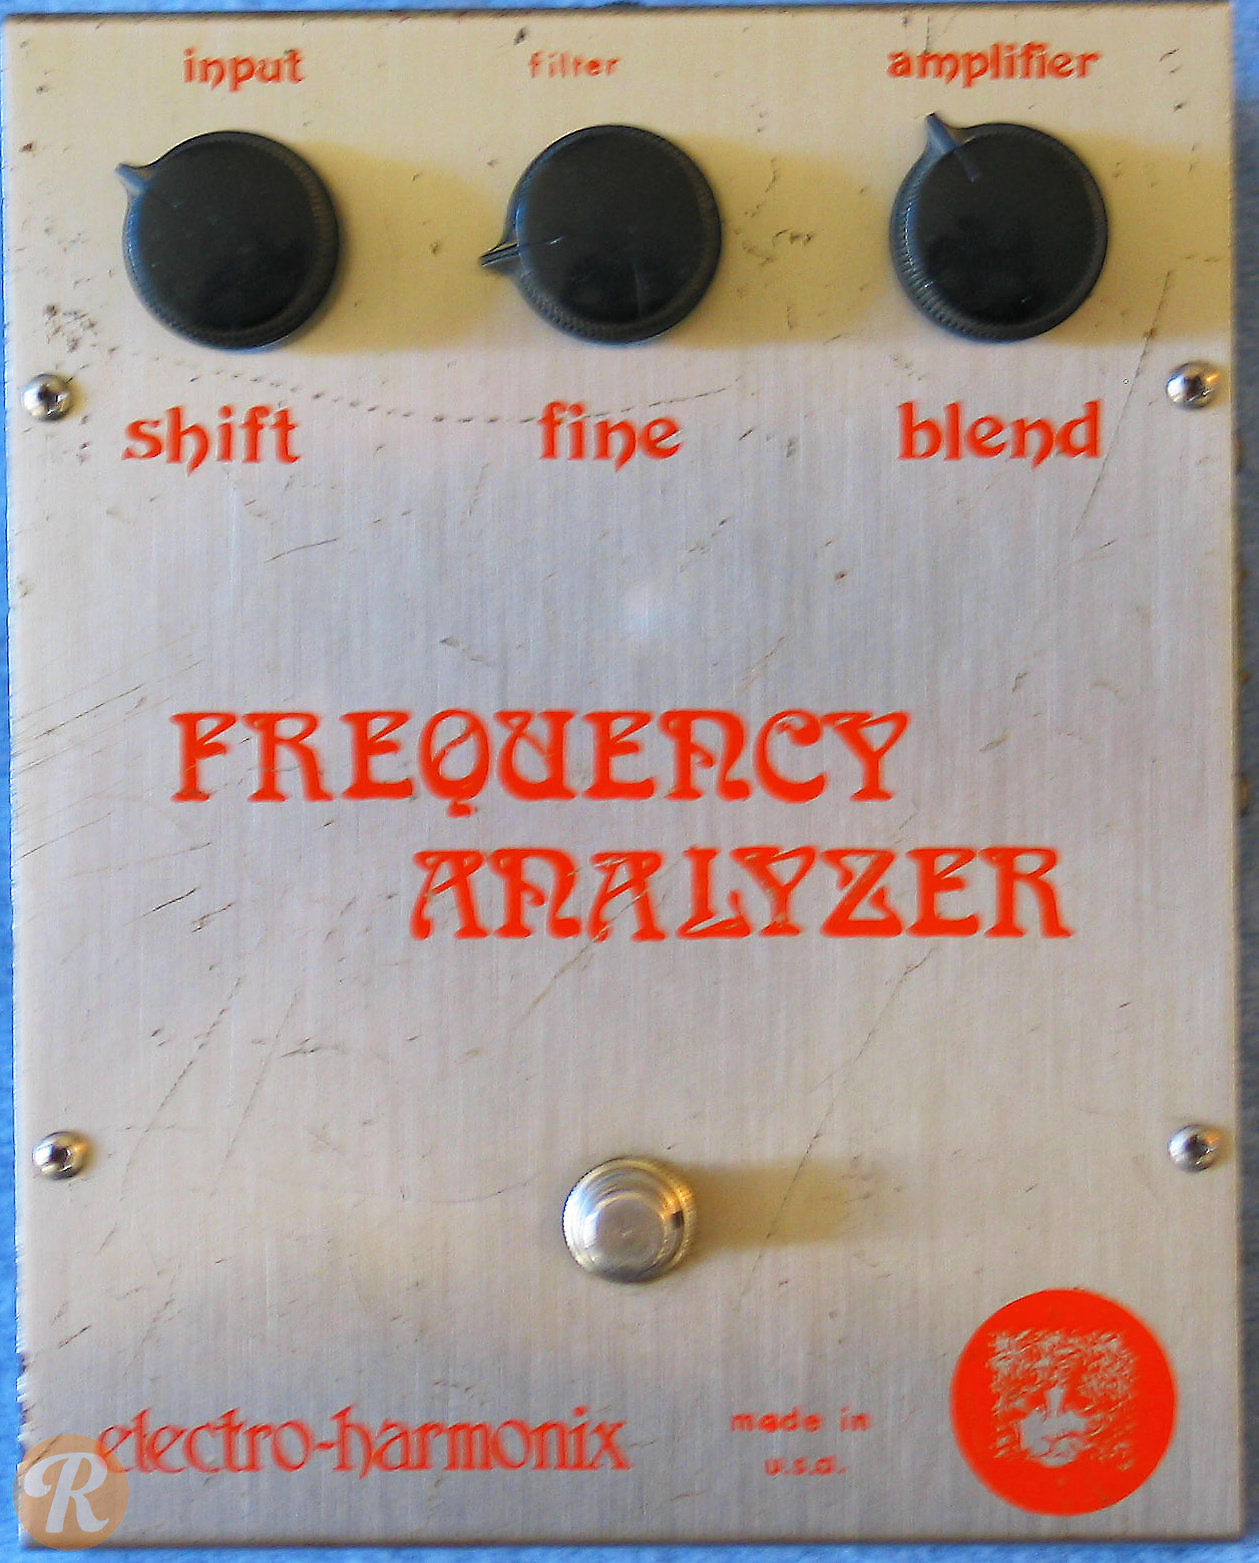 Electro-Harmonix Frequency Analyzer | Reverb UK